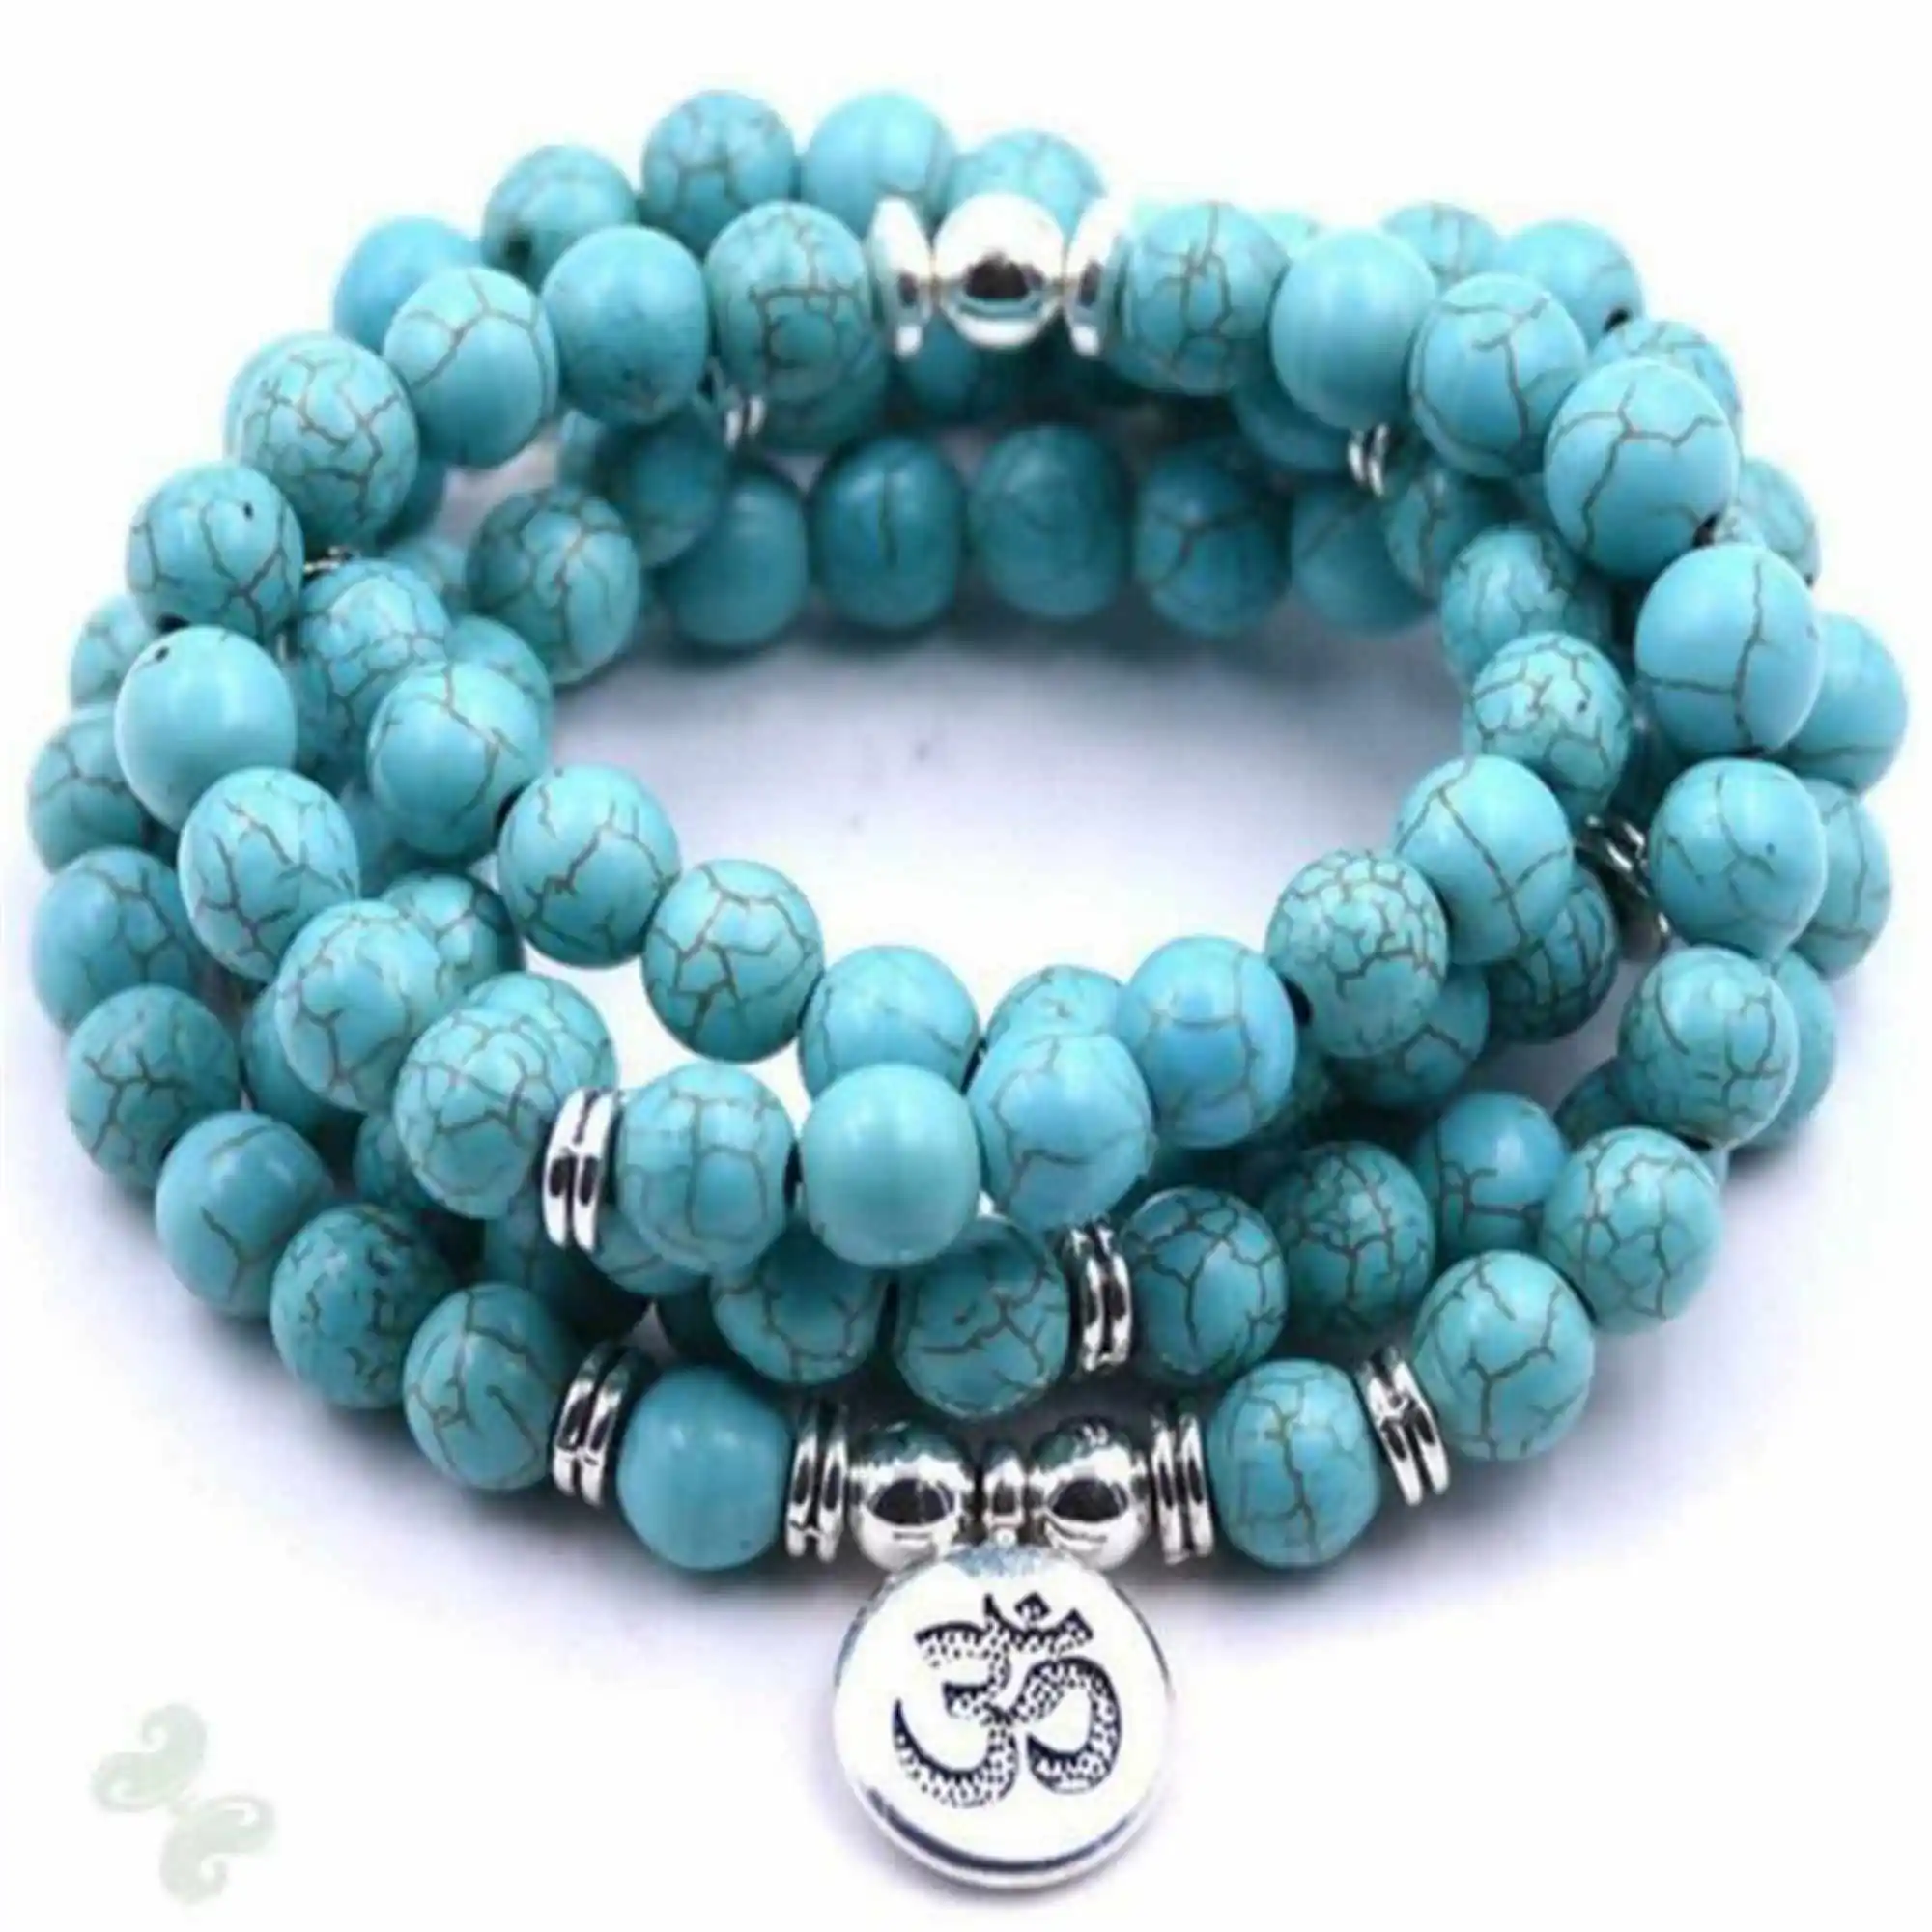 

6mm Blue Turquoise Bracelet 108 Beads Buddha Yoga Crafted Bangle Adjustable Semi-Precious Stones Contemporary Custom Unisex